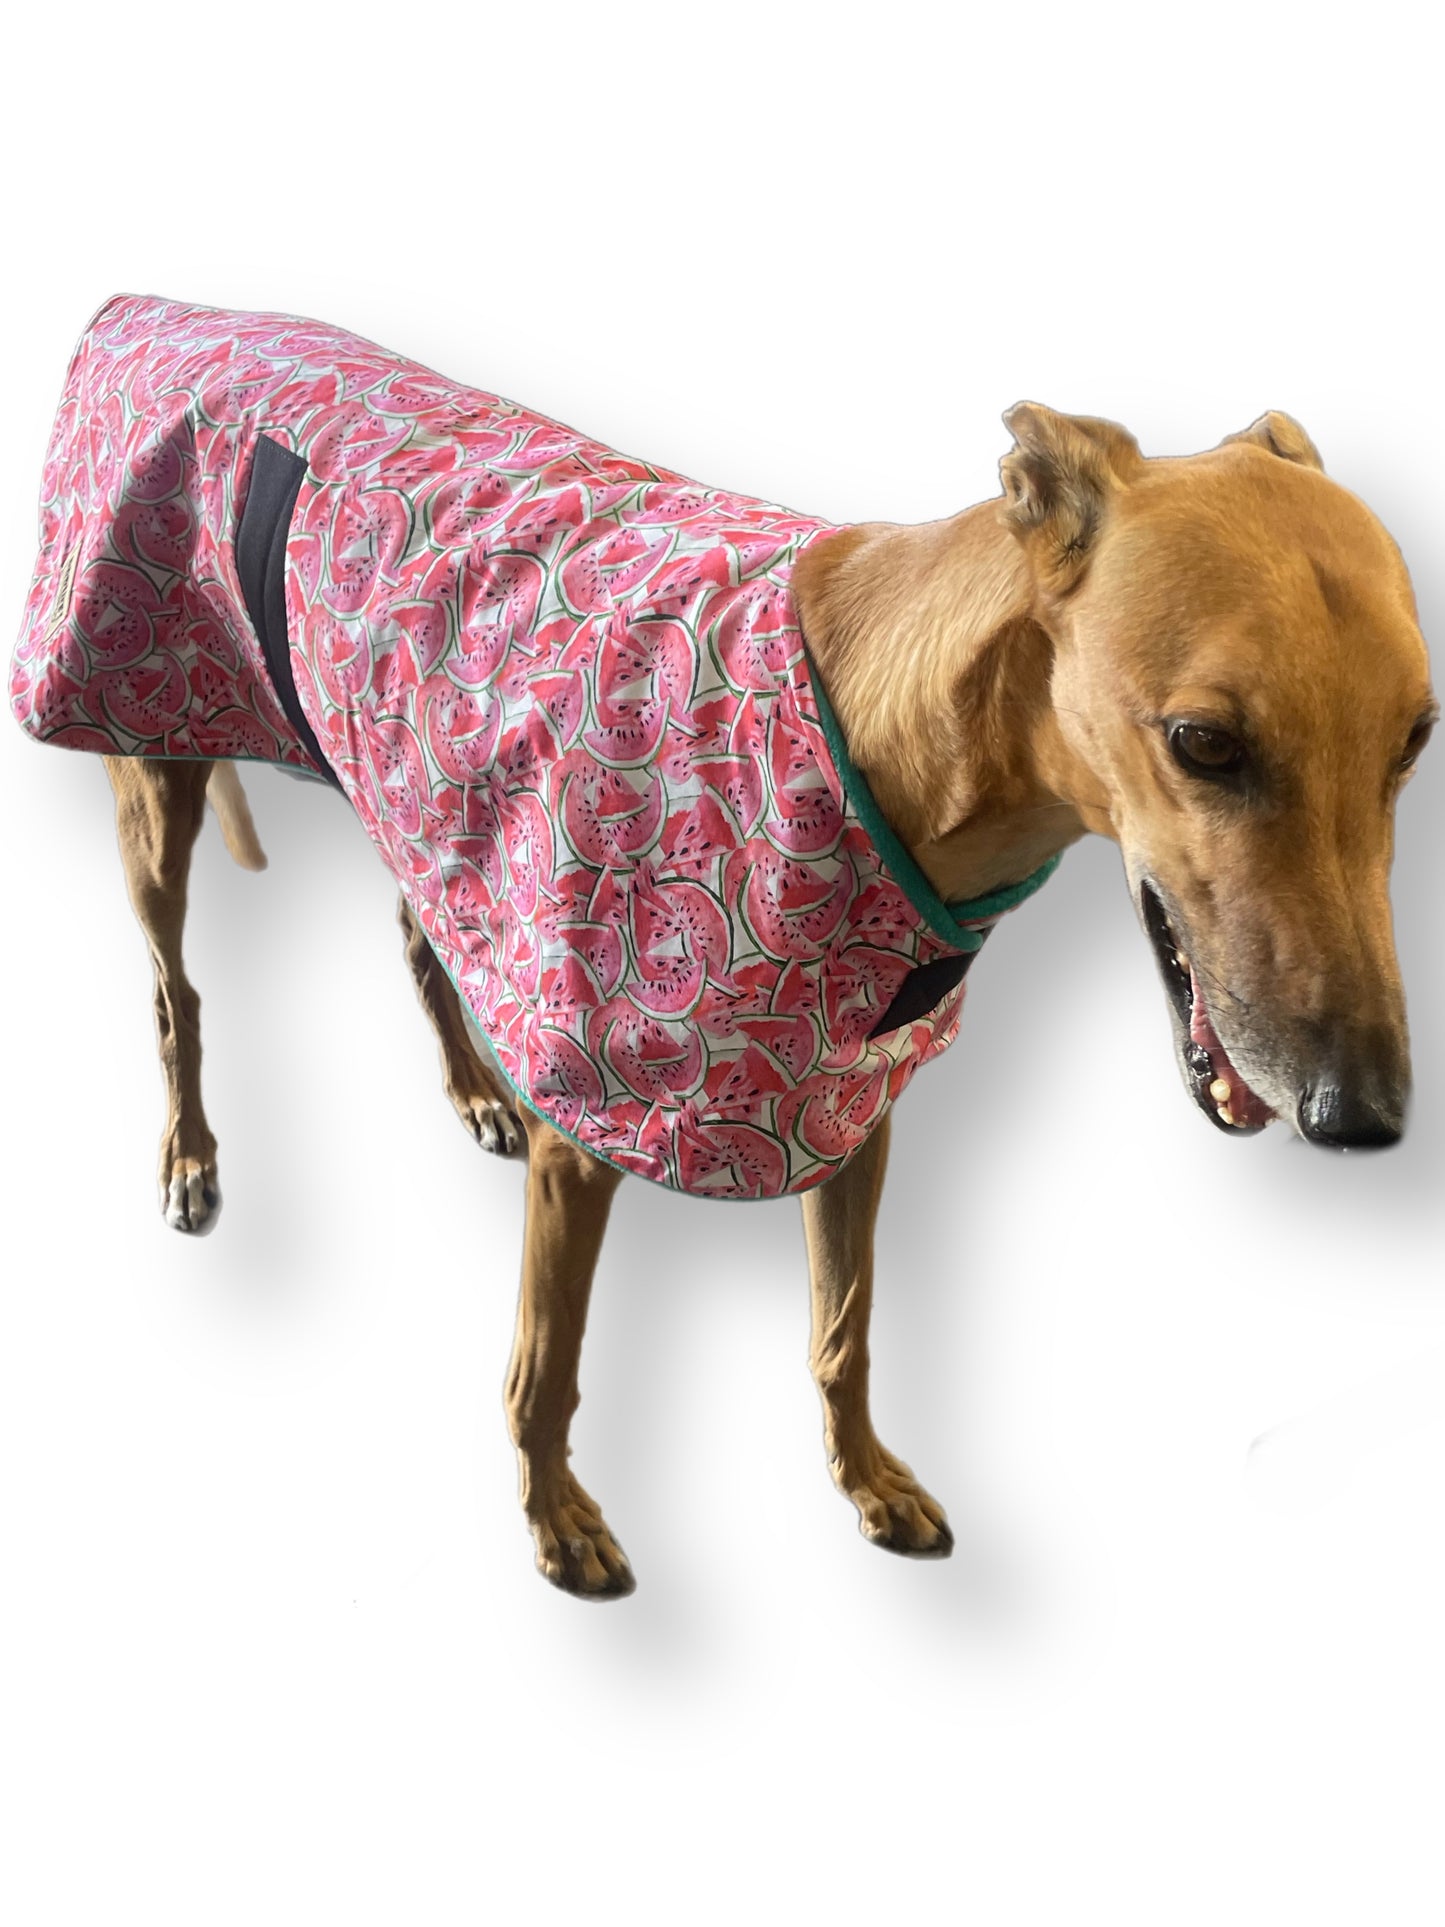 Summer/Autumn range classic style Greyhound ‘soft watermelon’ coat in lightweight cotton & plush fleece washable